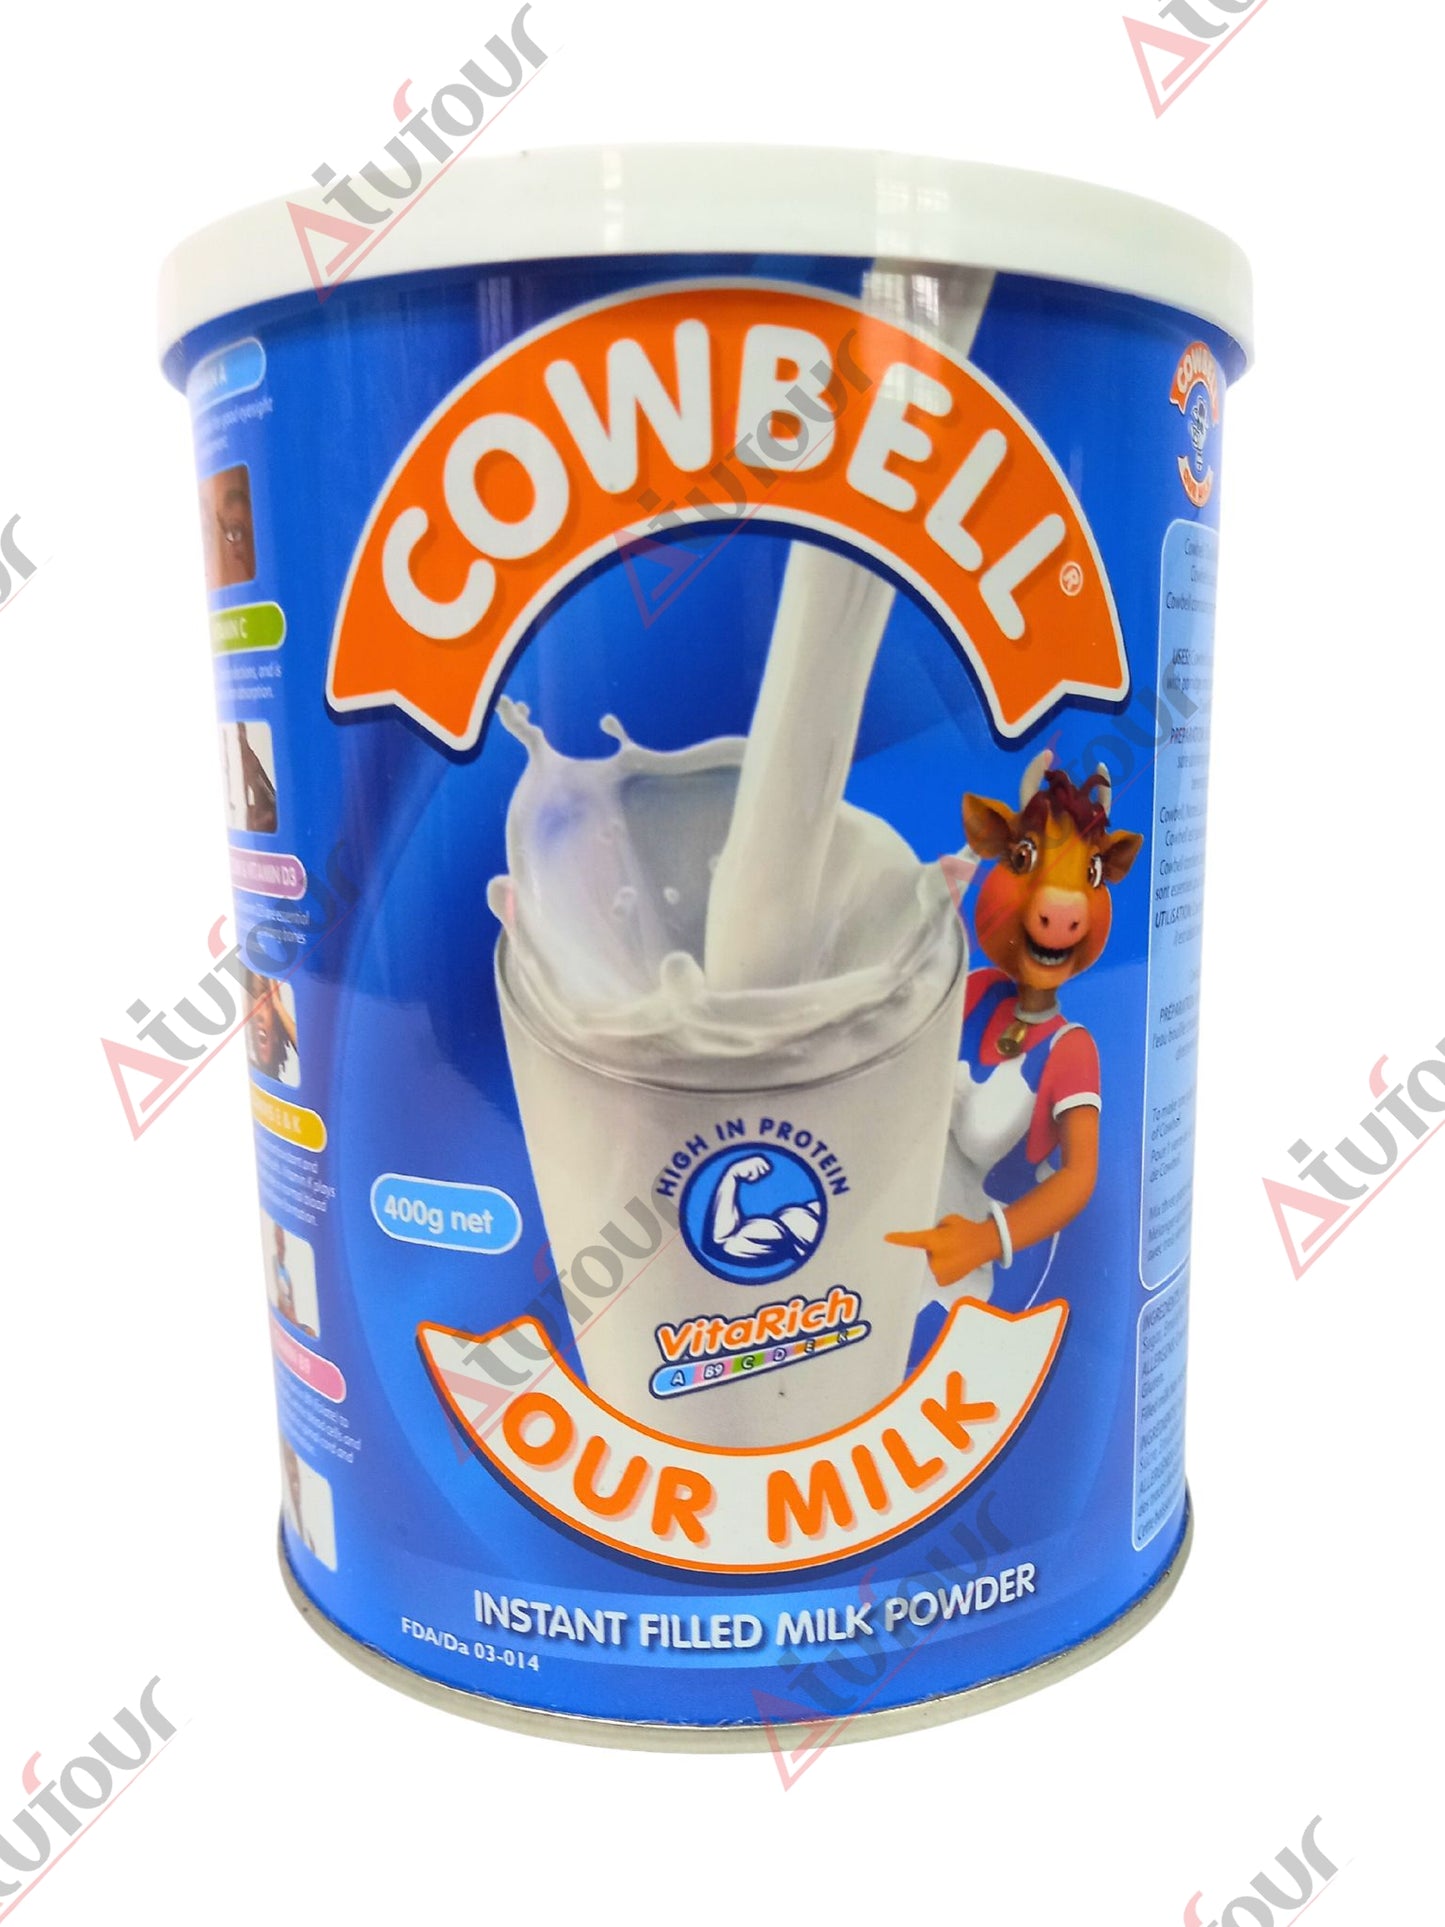 Cowbell Milk Powder Tin 400g